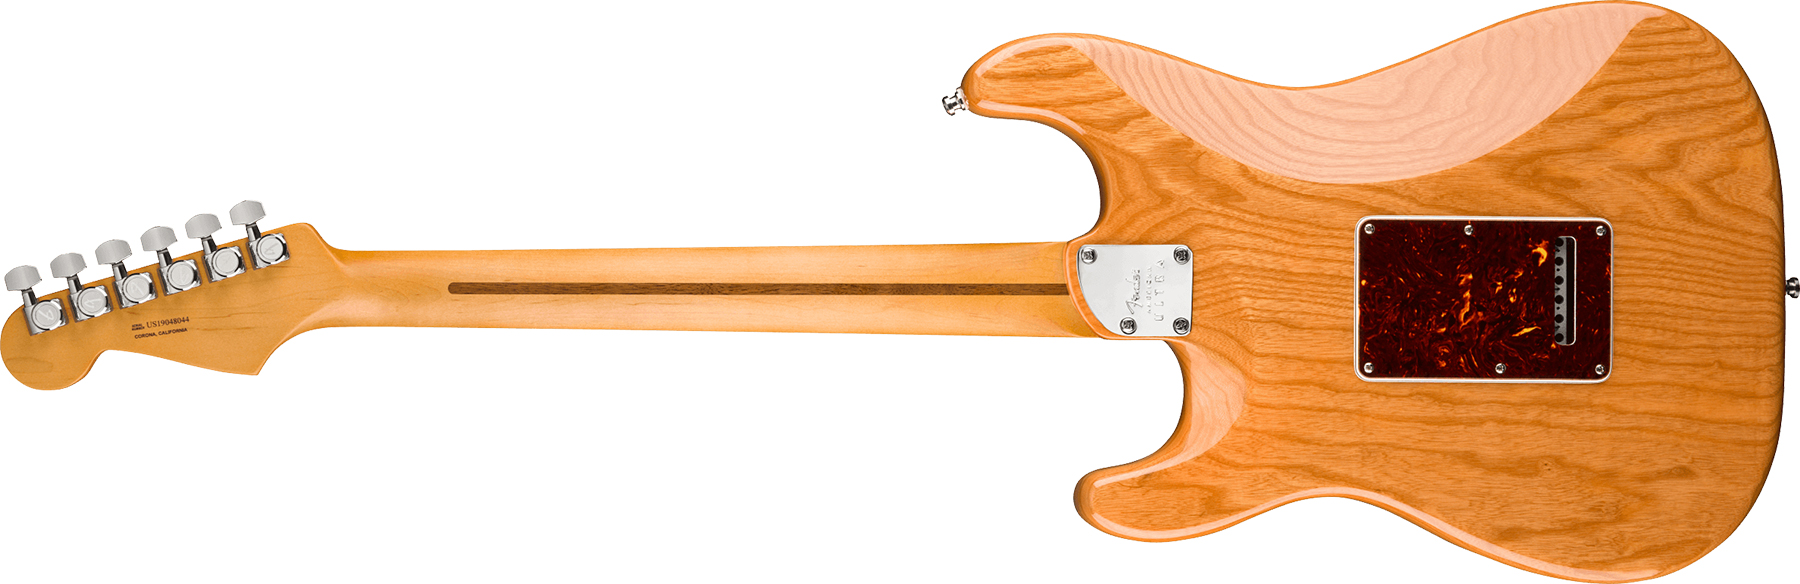 Fender Strat American Ultra Hss 2019 Usa Rw - Aged Natural - Guitare Électrique Forme Str - Variation 1